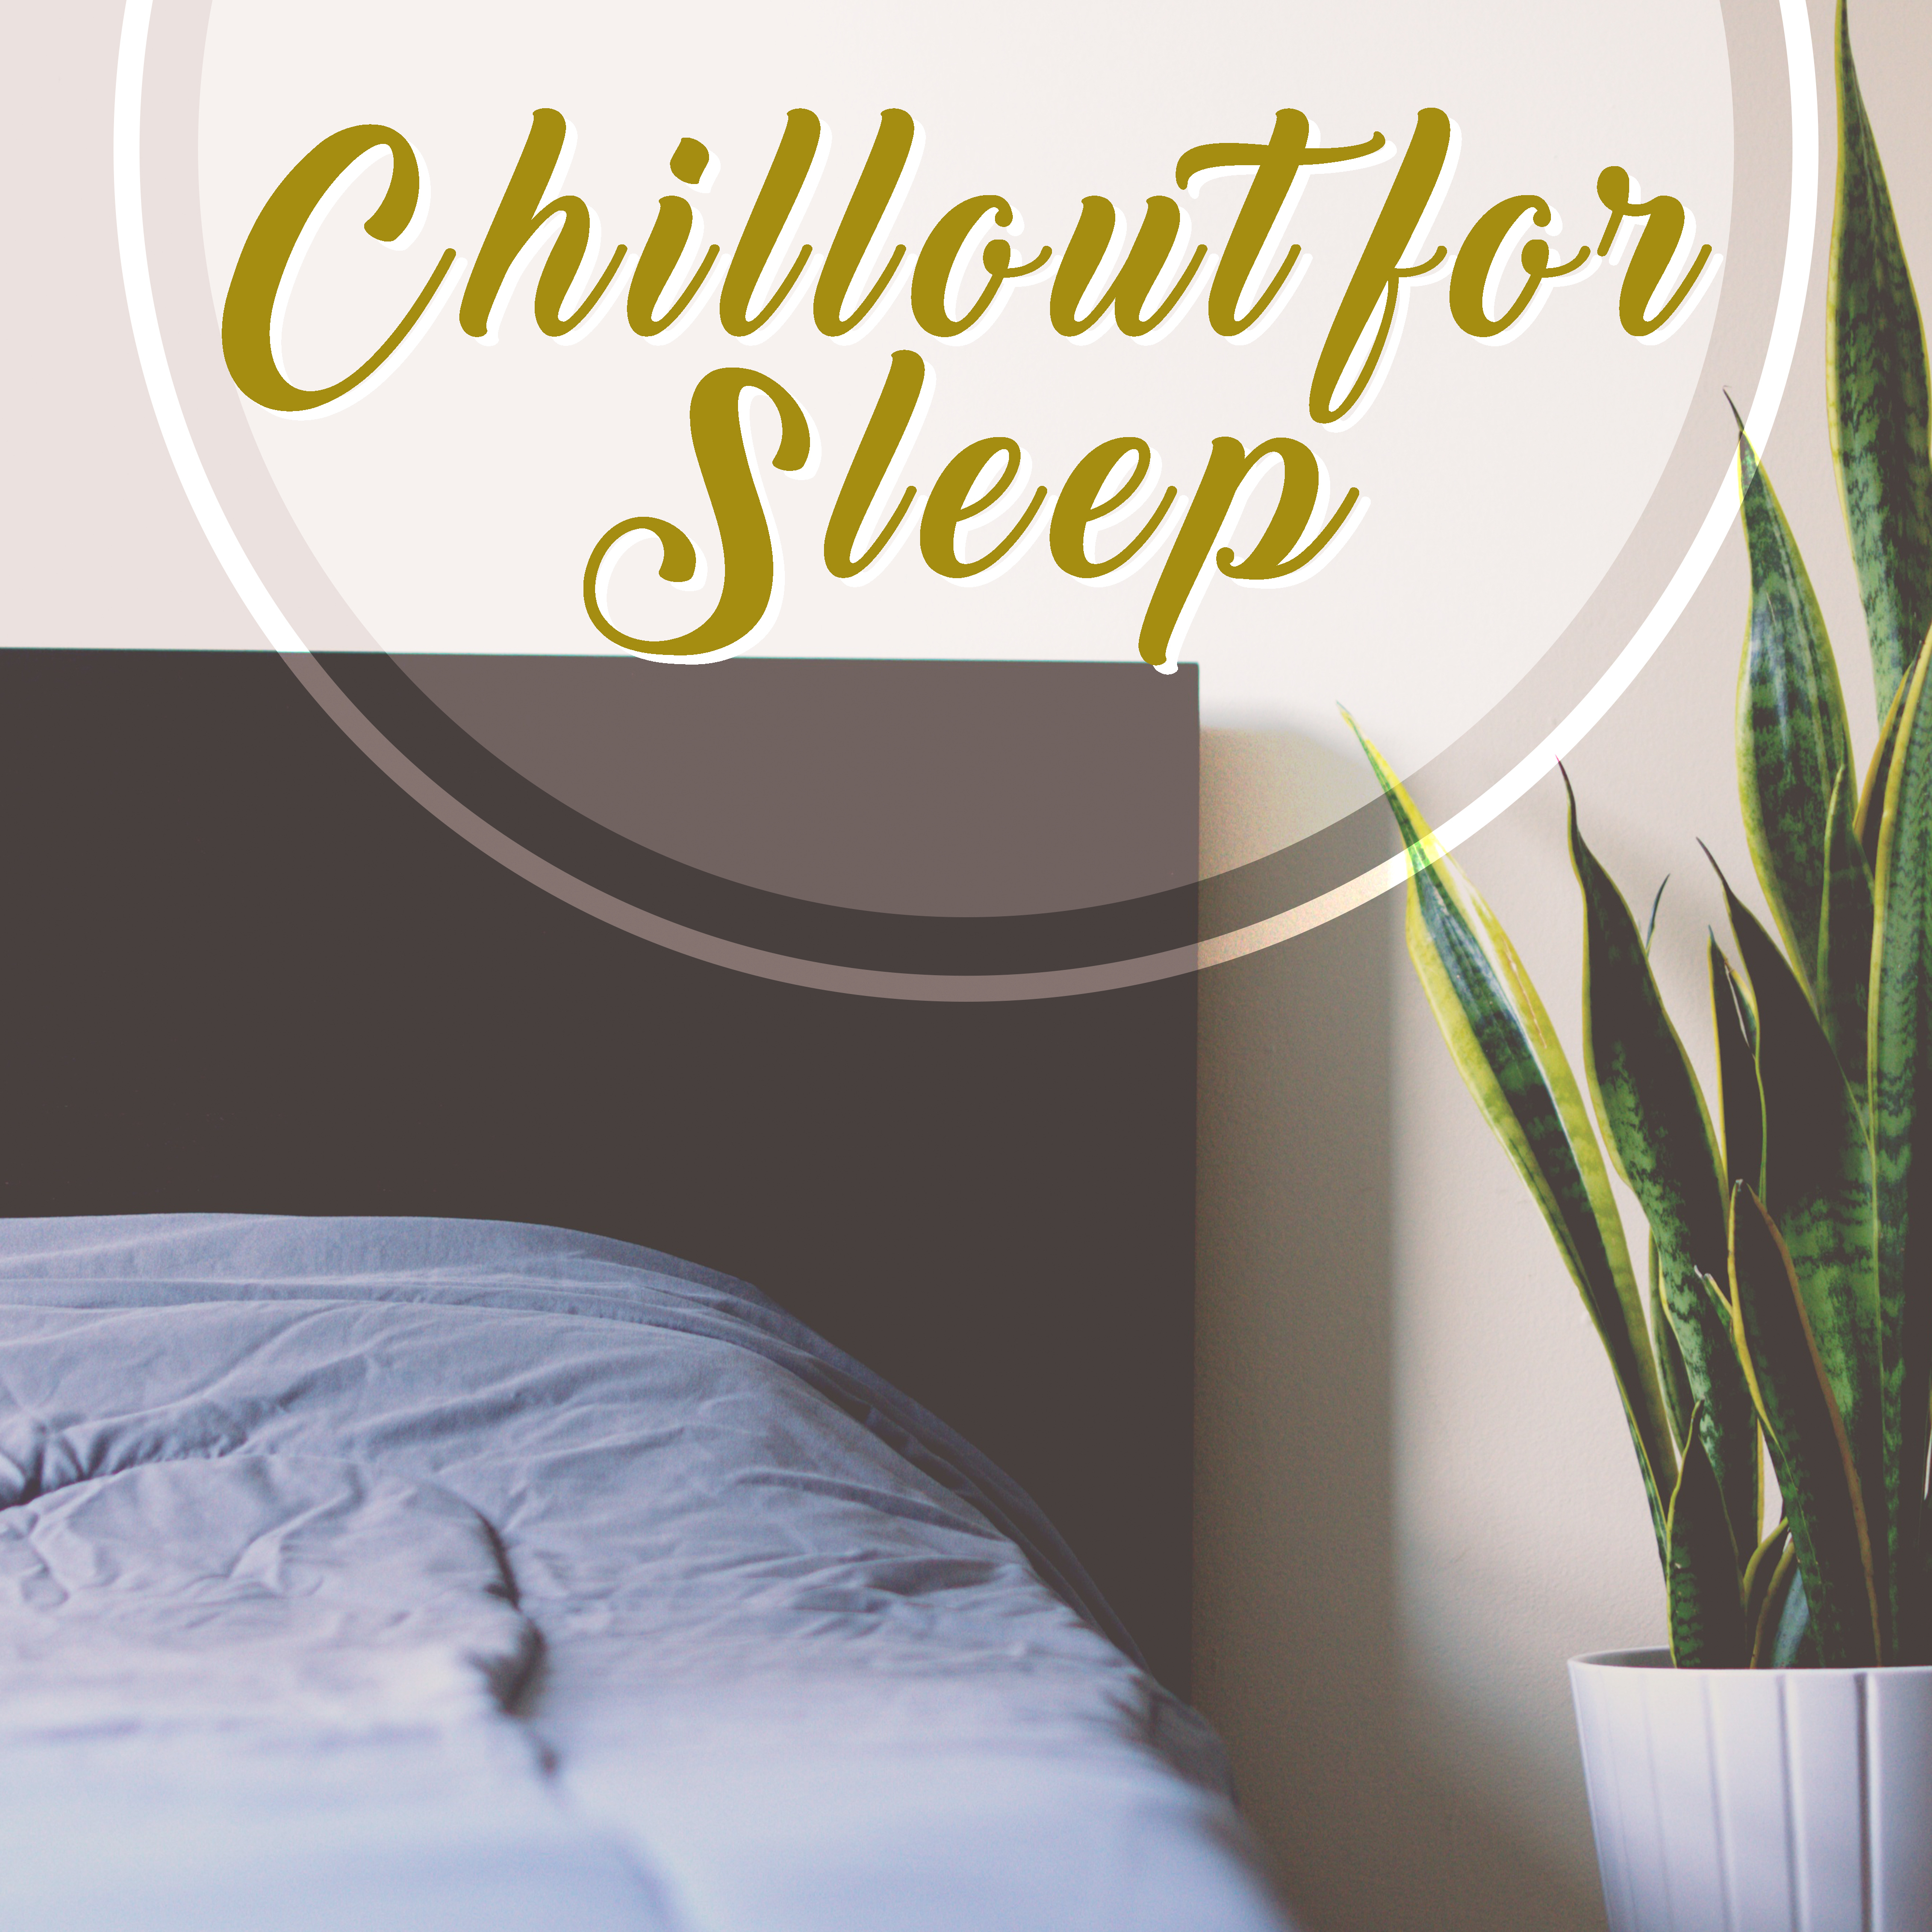 Chillout for Sleep – Calming Vibes, Sleep Music, Chill Out 2017, Sleep Lounge, Pure Relaxation, Deep Sleep